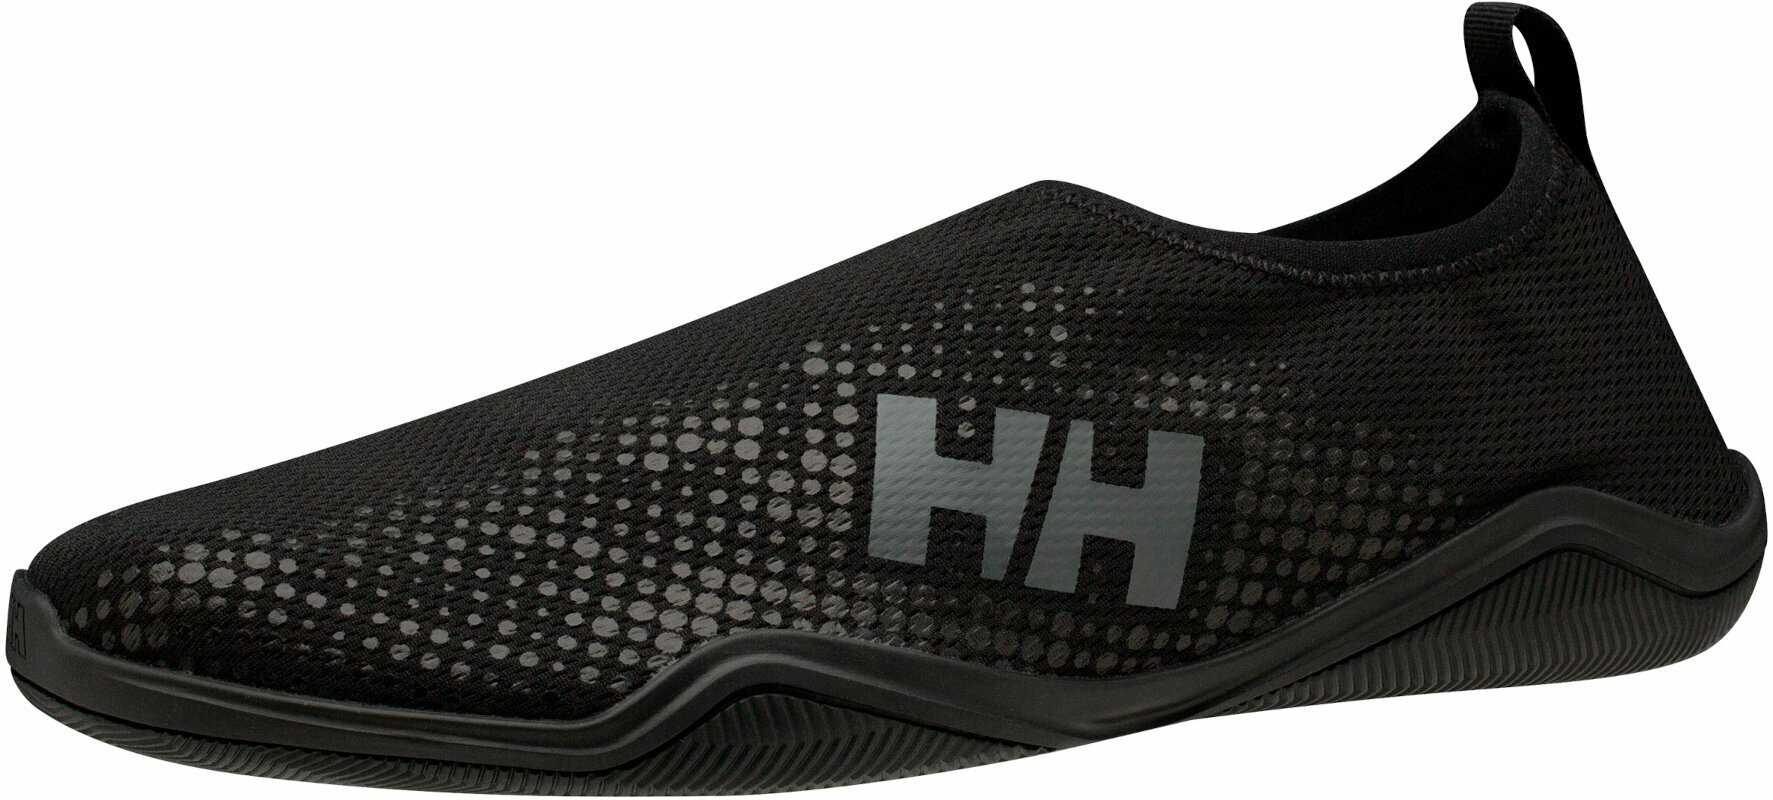 Mens Sailing Shoes Helly Hansen Men's Crest Watermoc Black/Charcoal 45